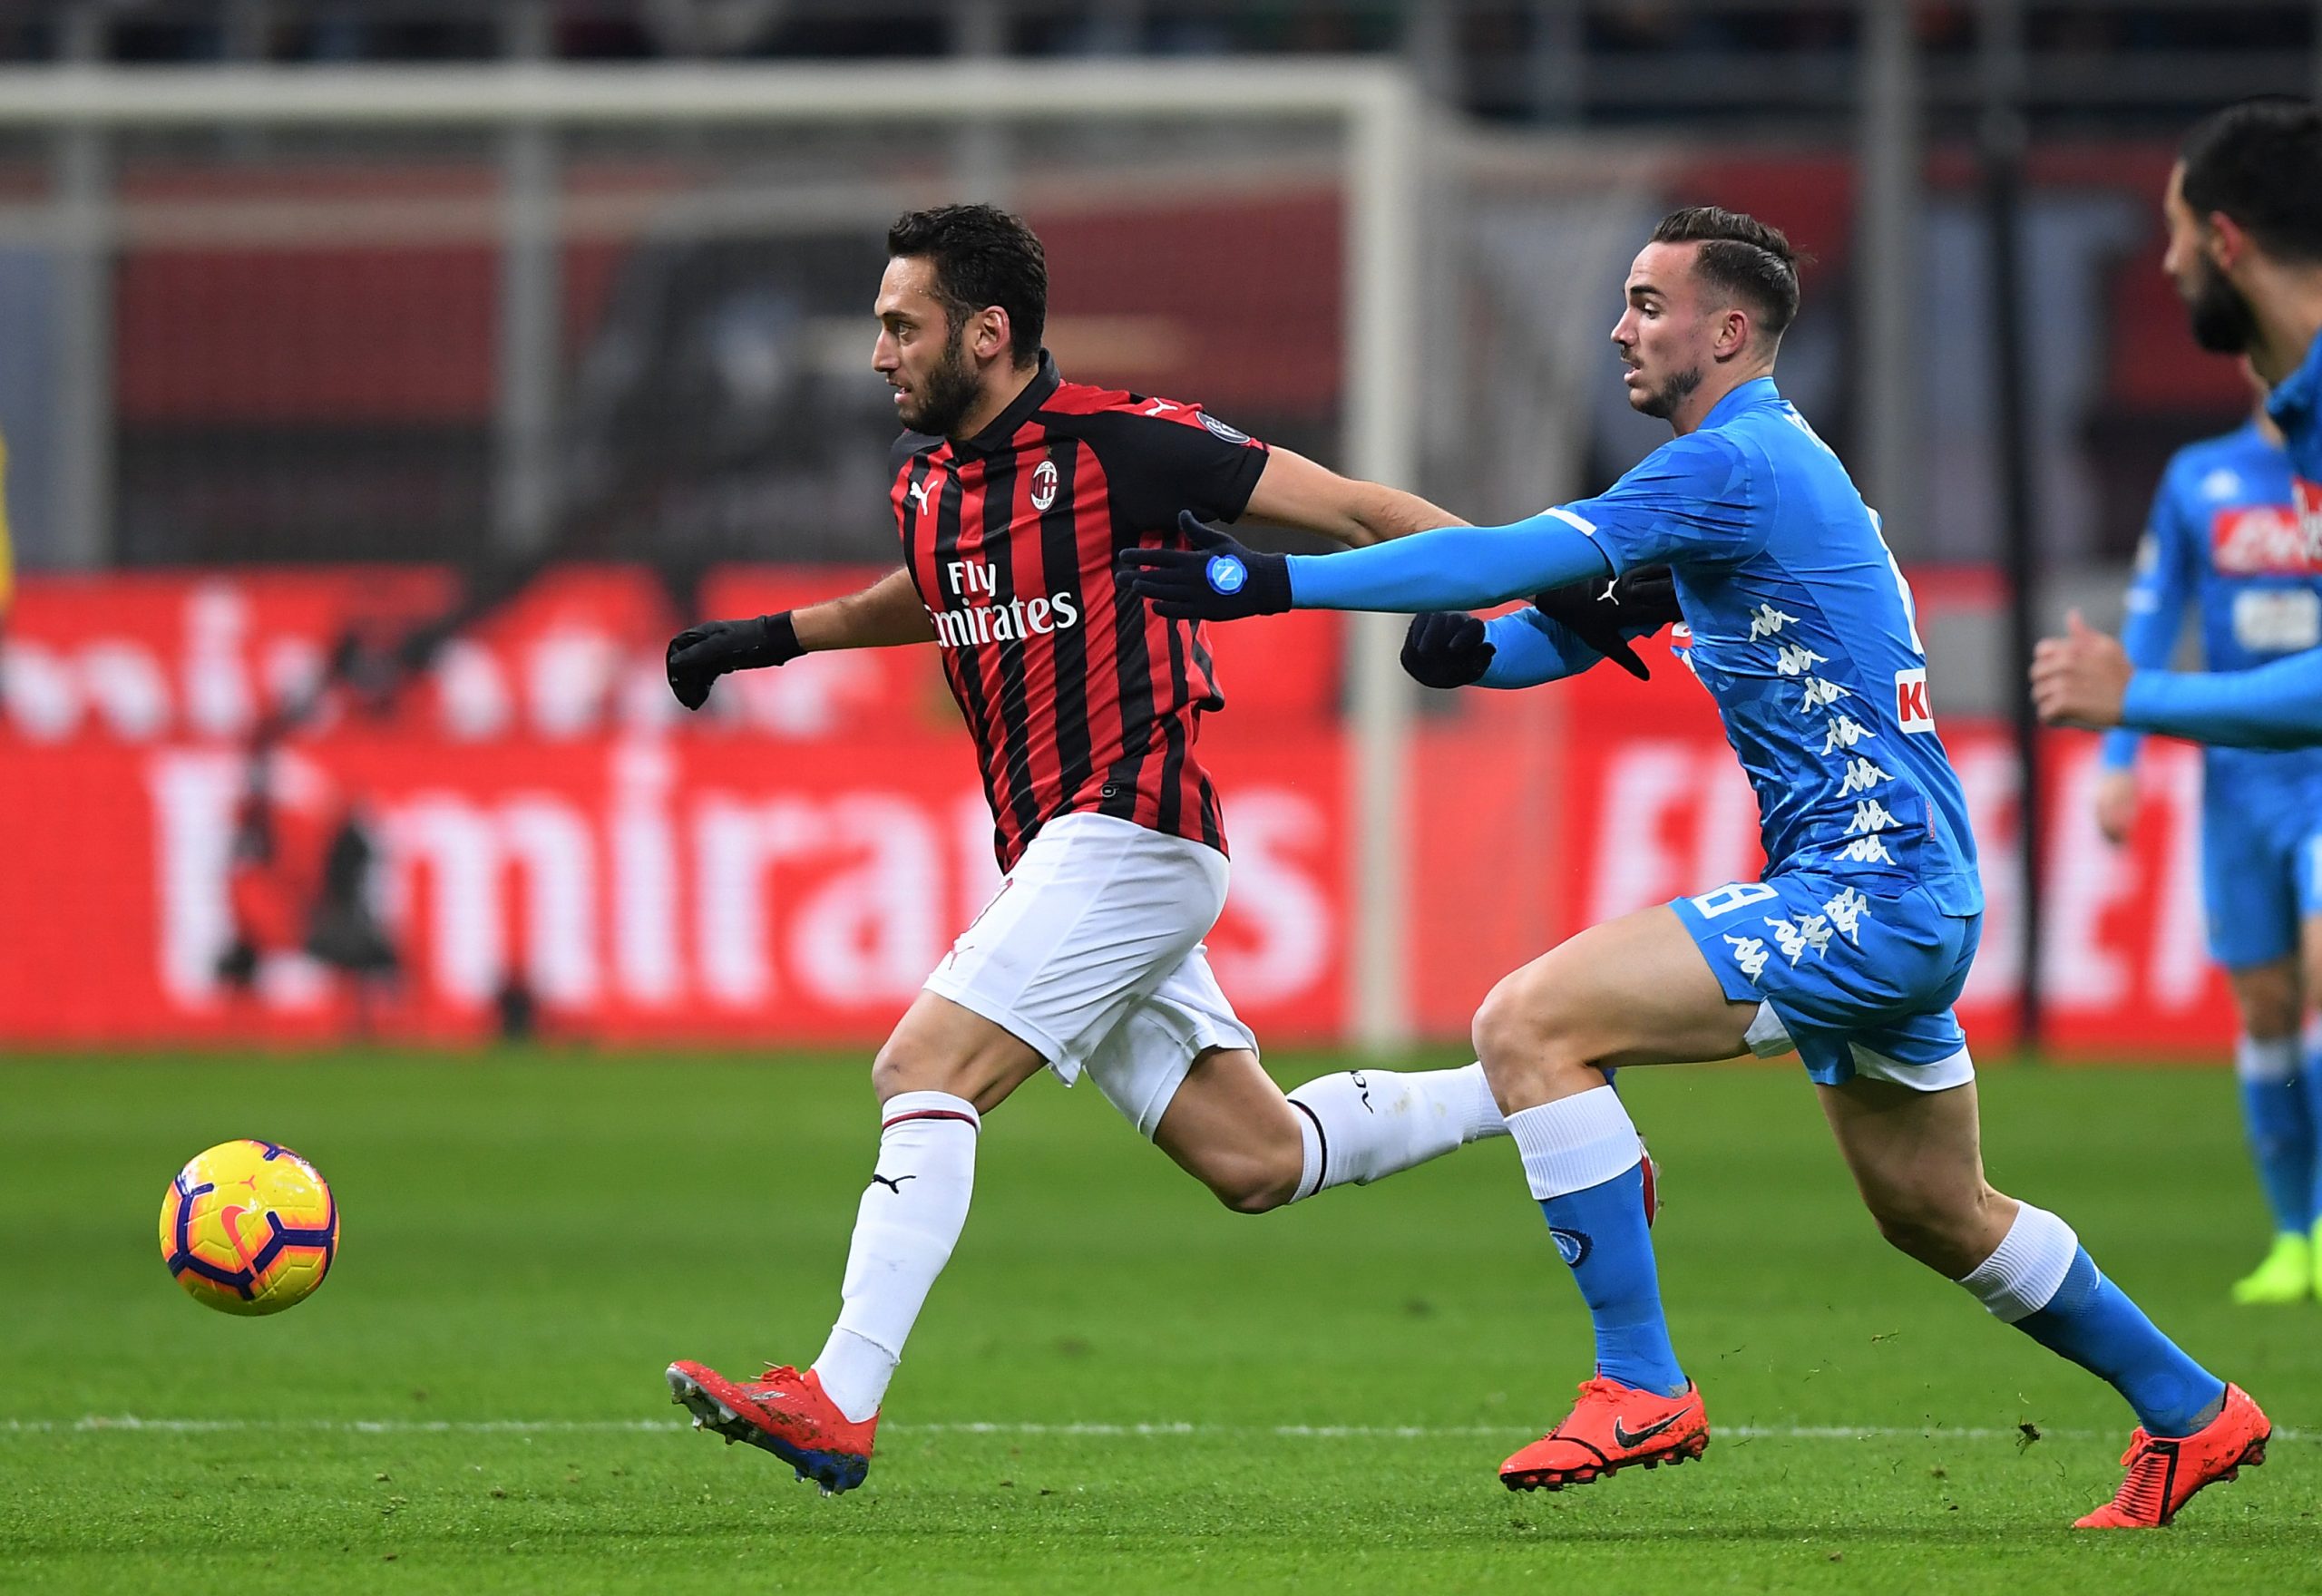 Naples vs Milan : Pioli et Gattuso alignent deux onze de gala, les compos officielles